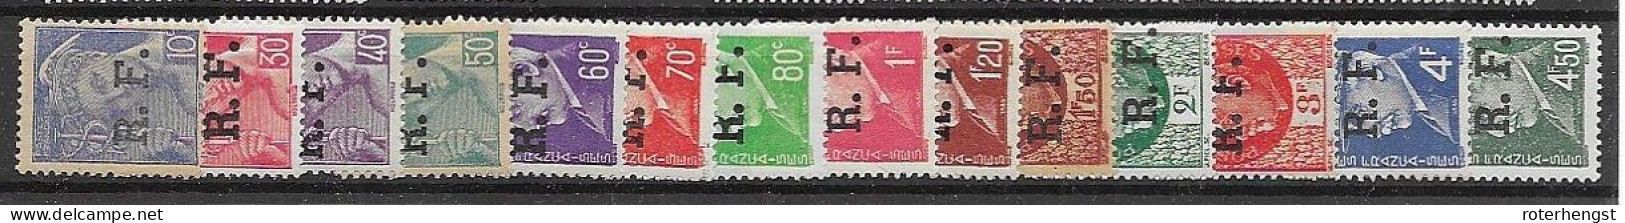 Lyon Liberation Set 14 Stamps (2,40 F Missing) 20 Euros Mnh ** Nsc ** - War Stamps